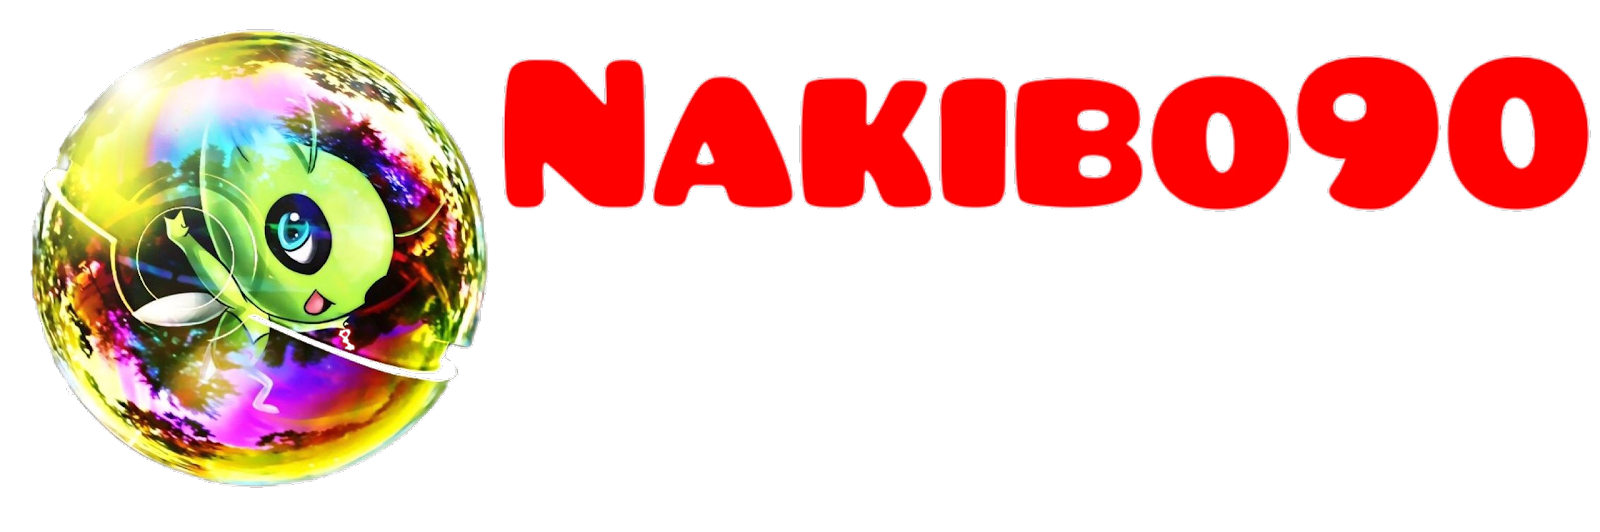 Nakibo90 - Pokemon Go - Top Seller Pokemon Pvp - New Shiny